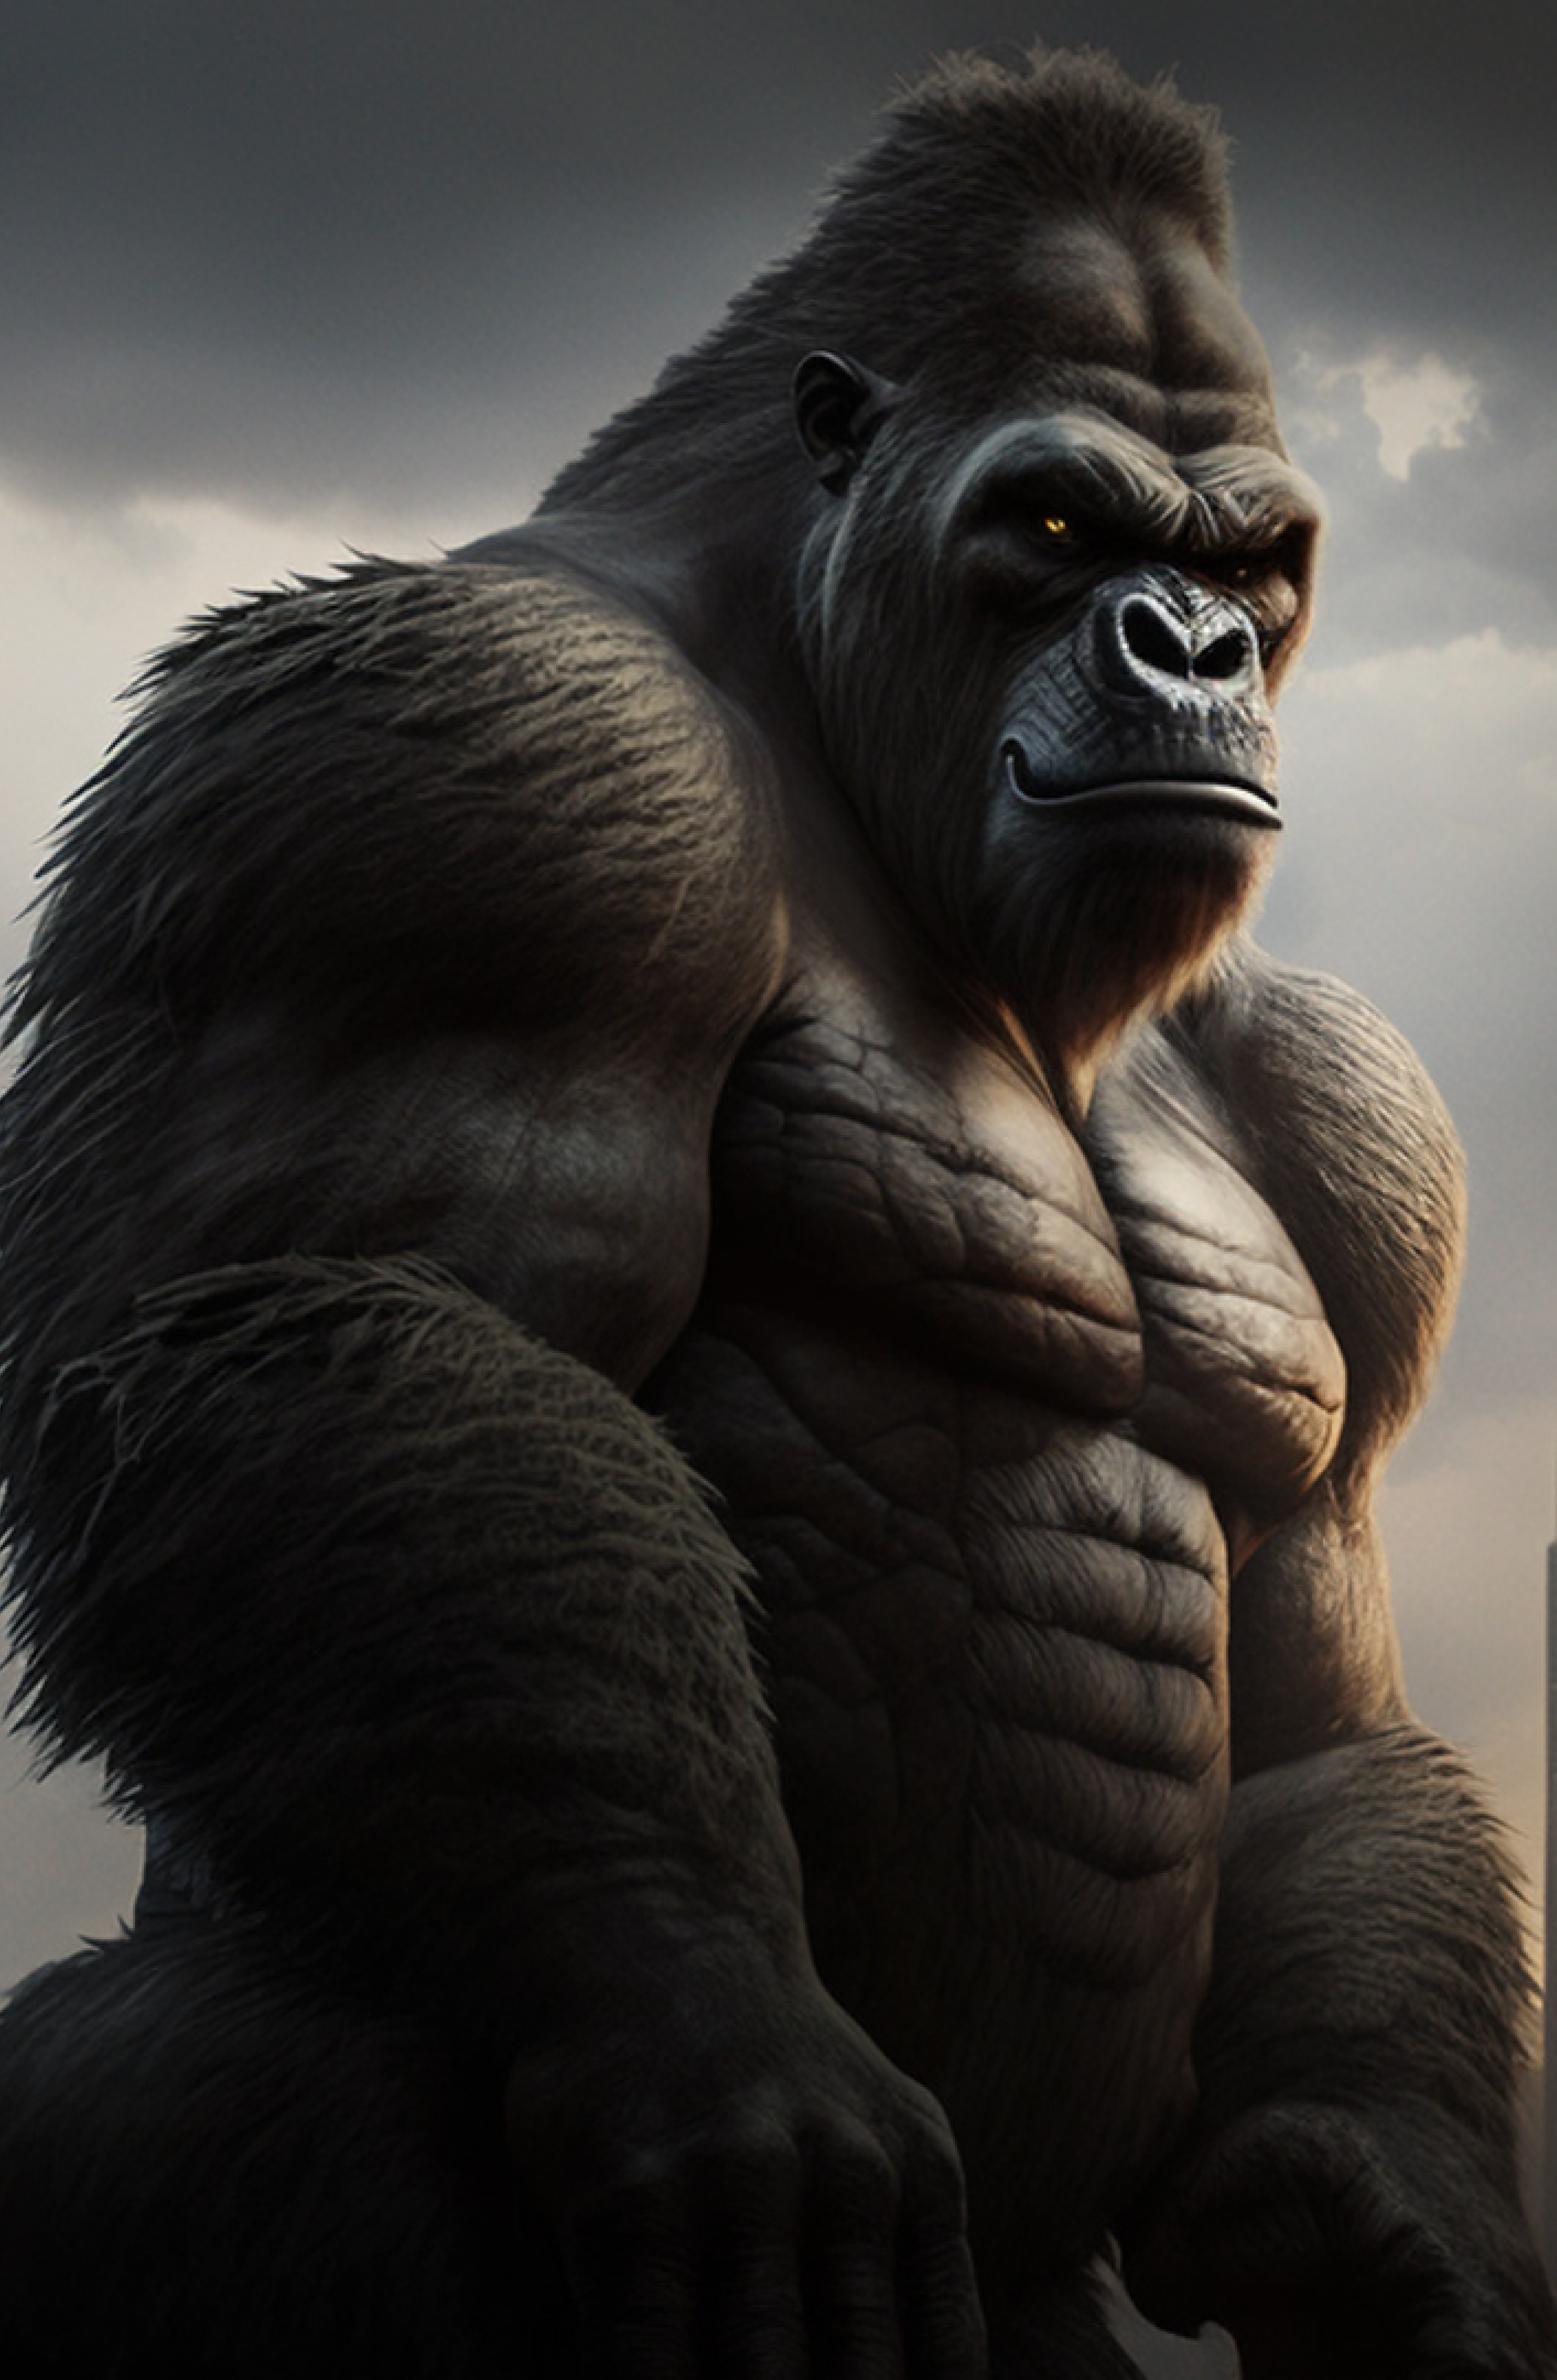 Godzilla Vs Kong Wallpapers - Top Best Godzilla Vs Kong Movie Backgrounds